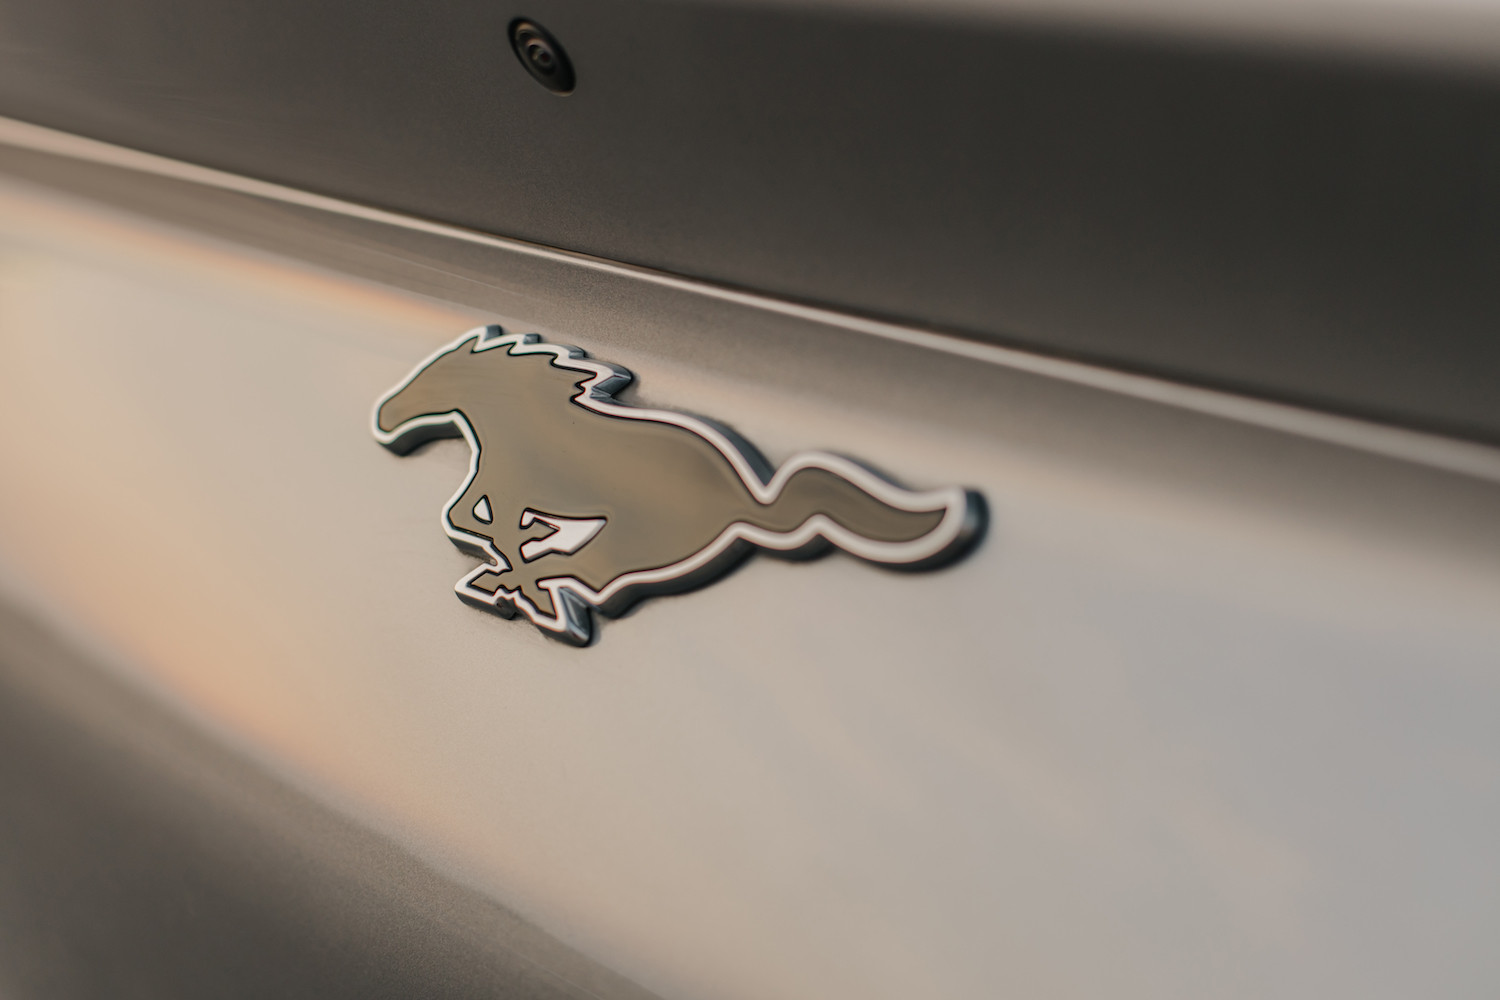 Dark Gray Ford Mustang CTV Electric 2020